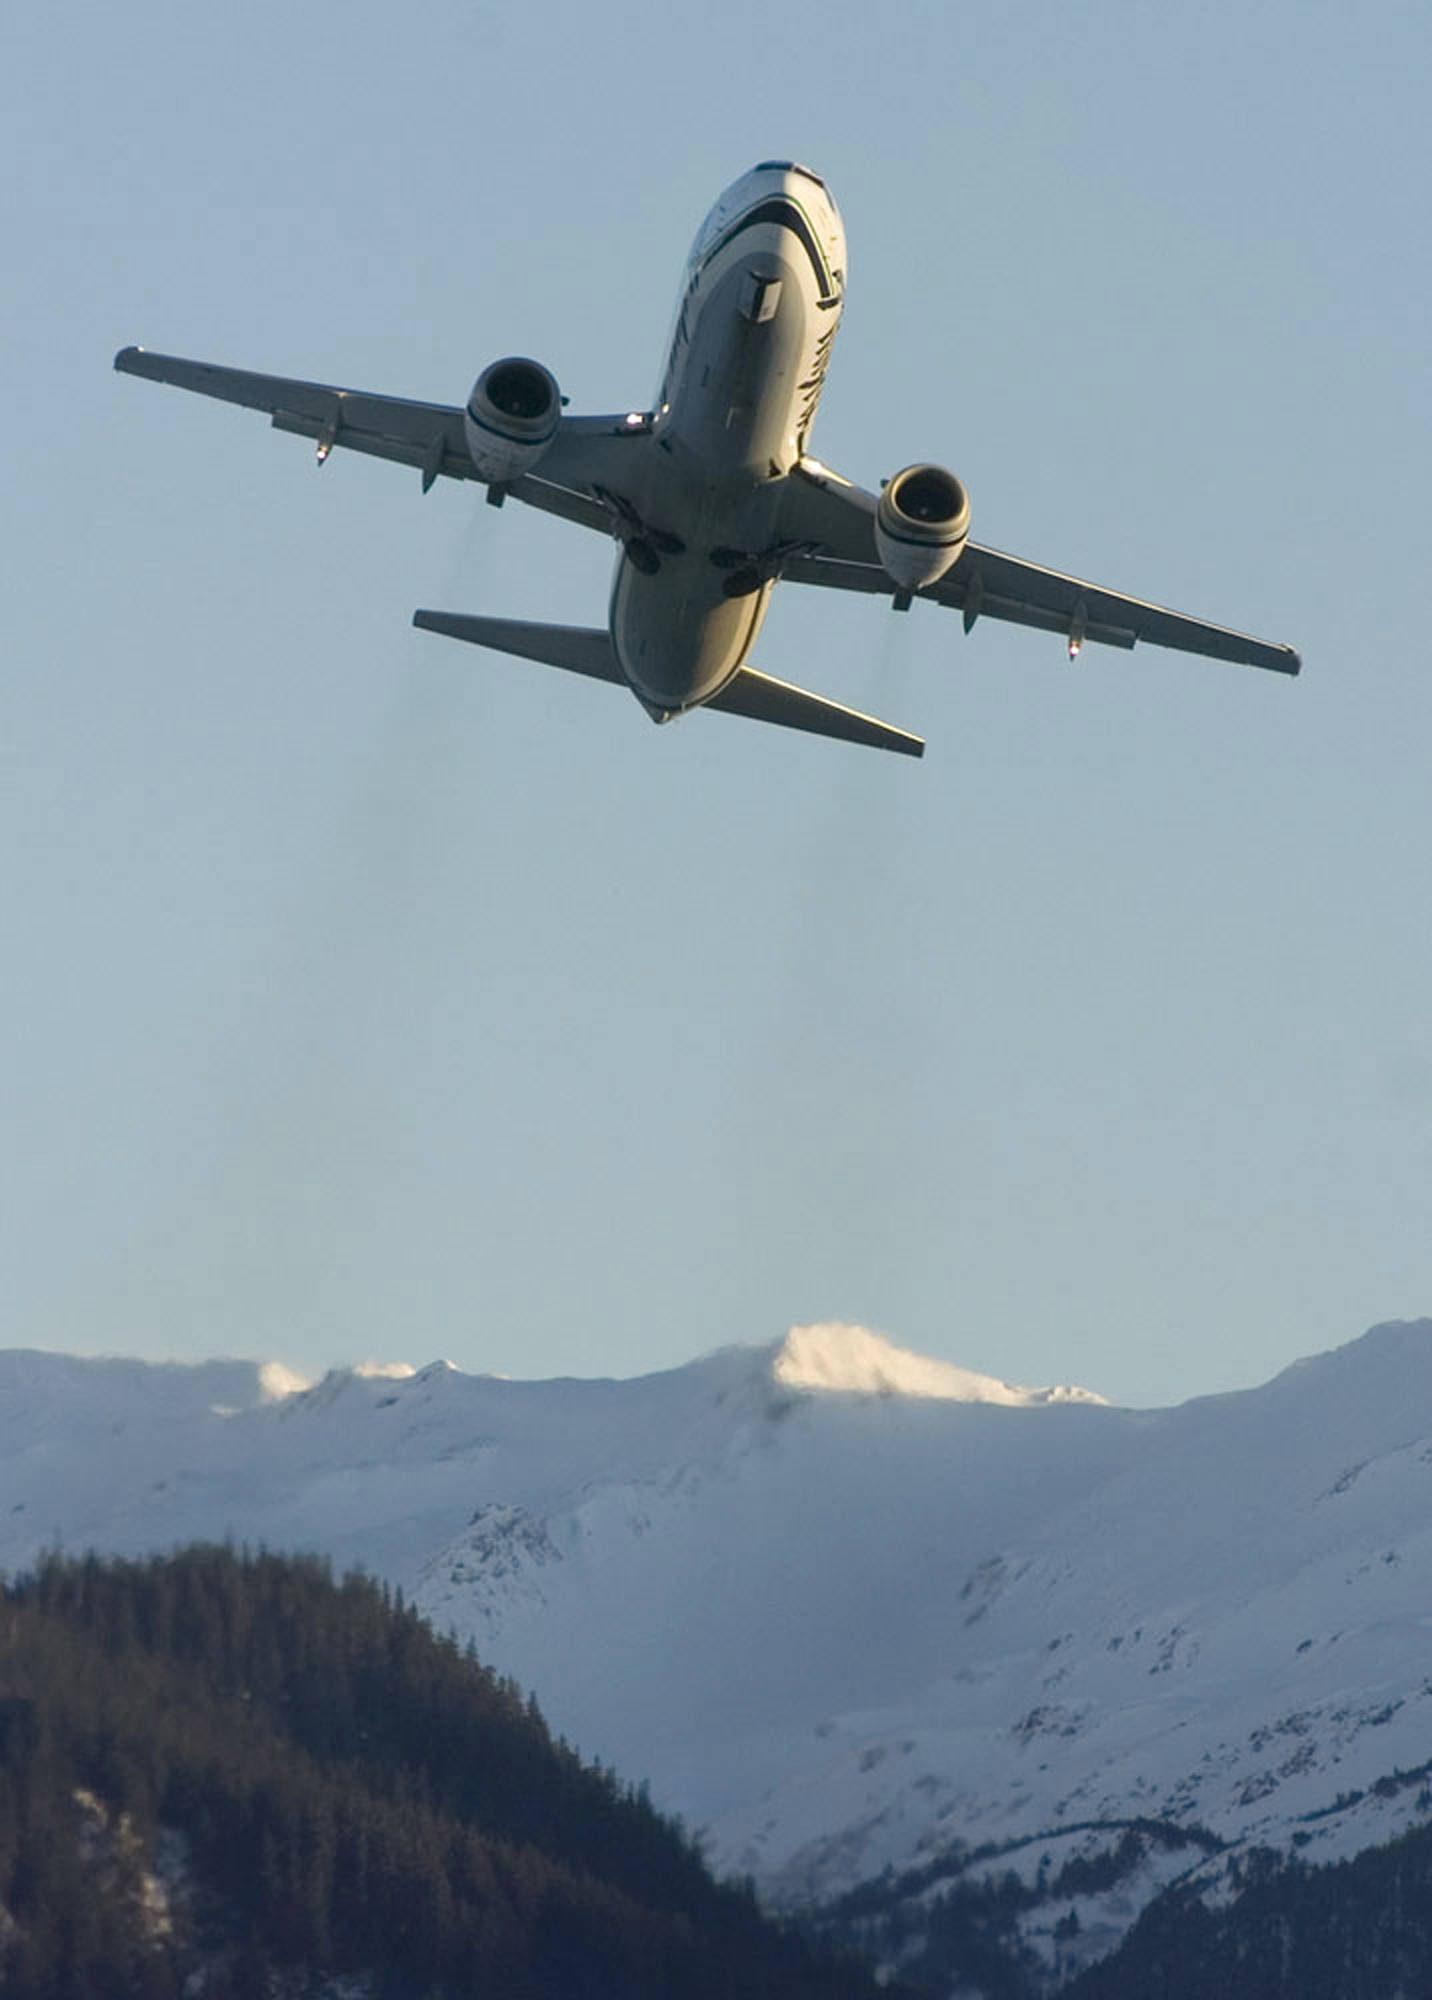 In this 2009 photo, an Alaska Airlines passenger jet lifts off from Juneau International Airport. (Michael Penn | Juneau Empire File)